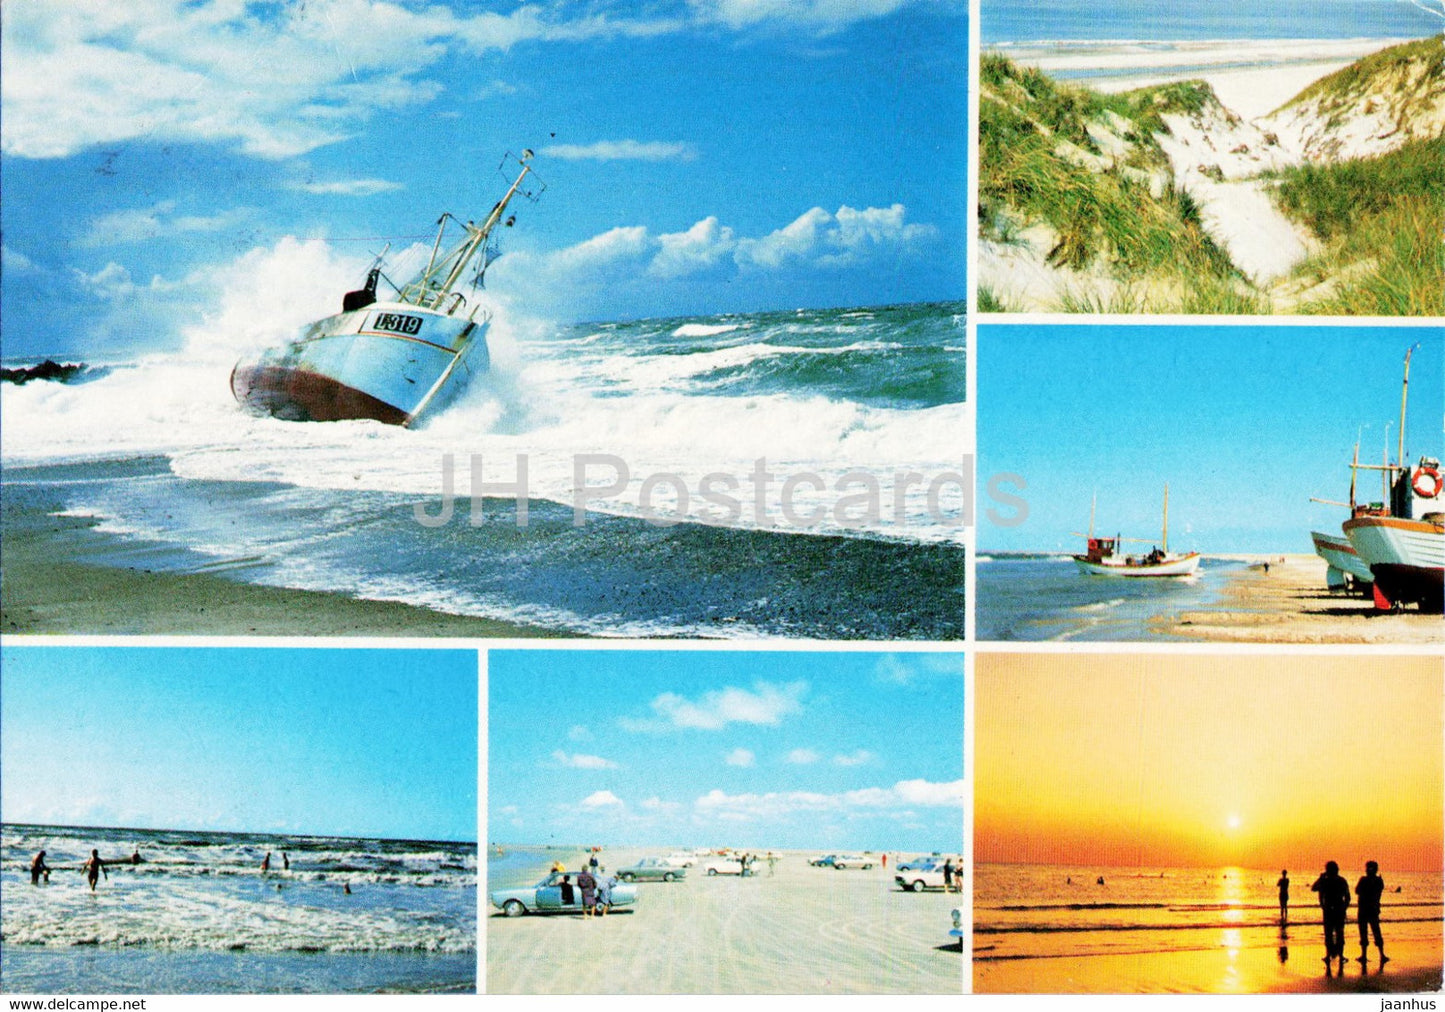 Vesterhavet - The North Sea - sea - beach - boat - ship - multiview - 1993 - Denmark - used - JH Postcards